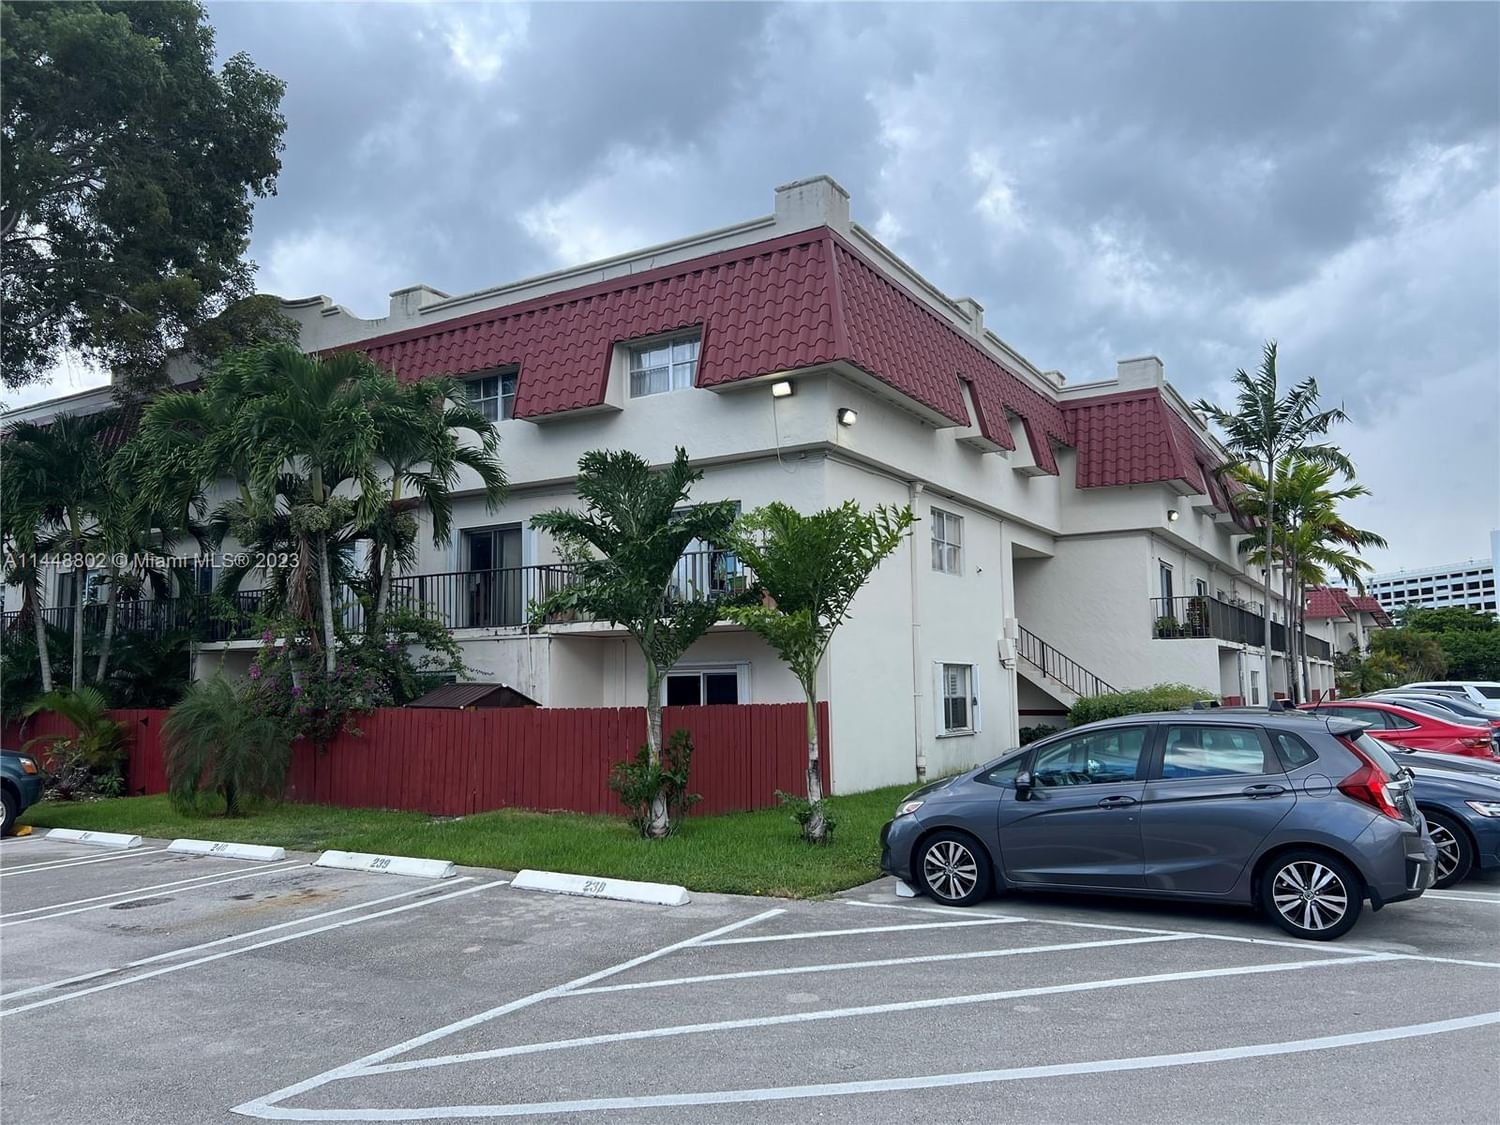 Real estate property located at 8600 67th Ave #910, Miami-Dade County, Miami, FL